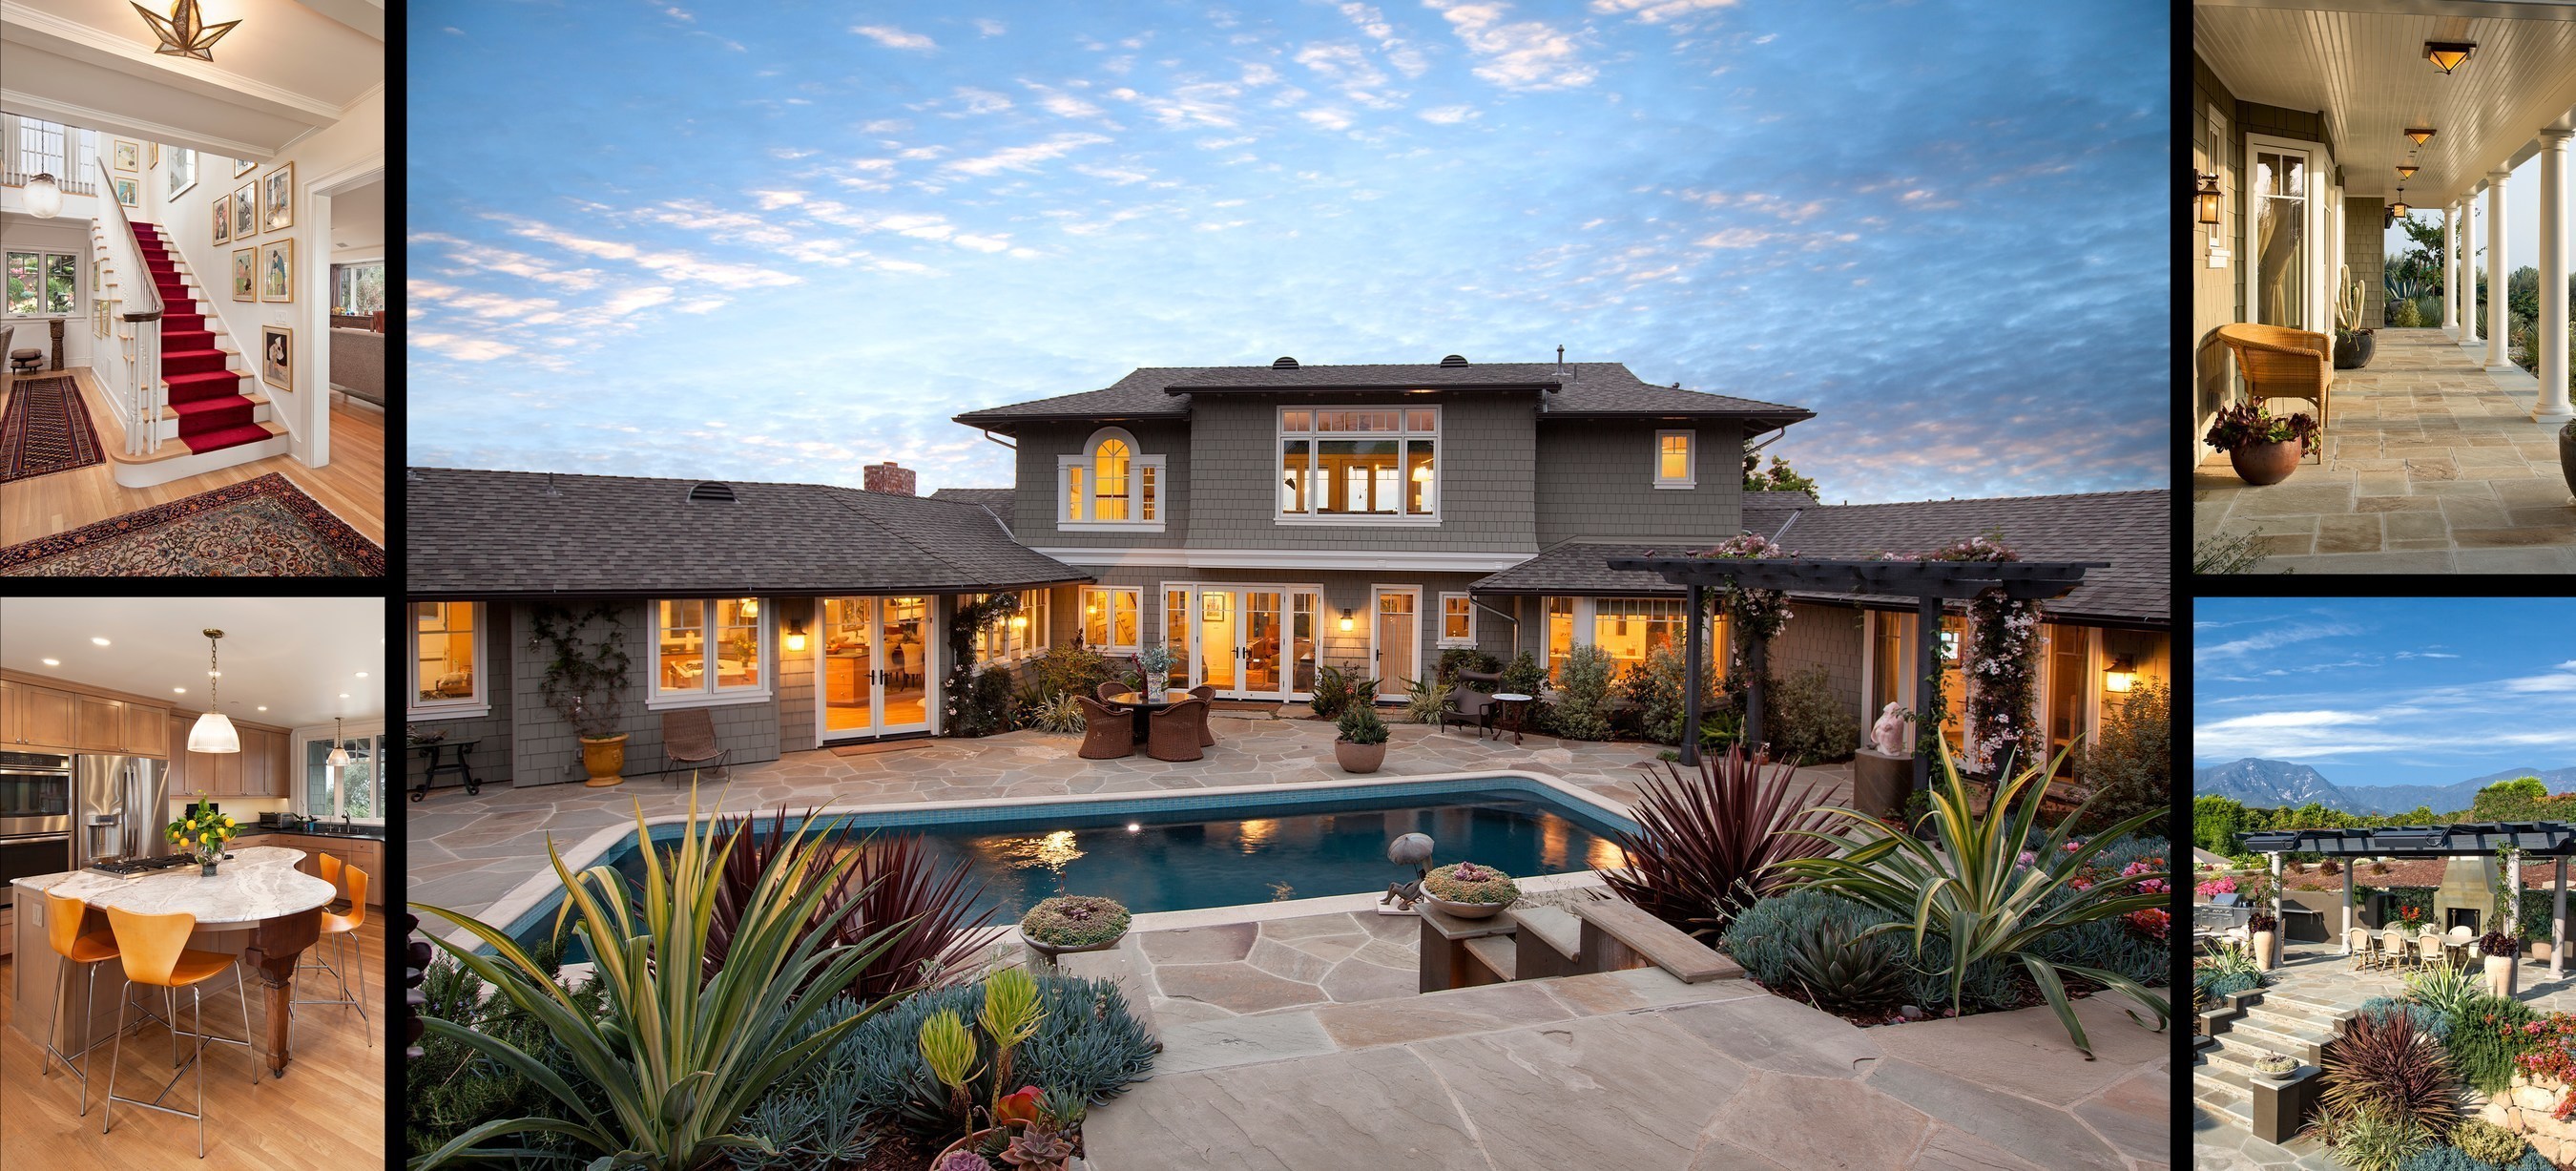 Hamptons inspired residential remodel in Montecito